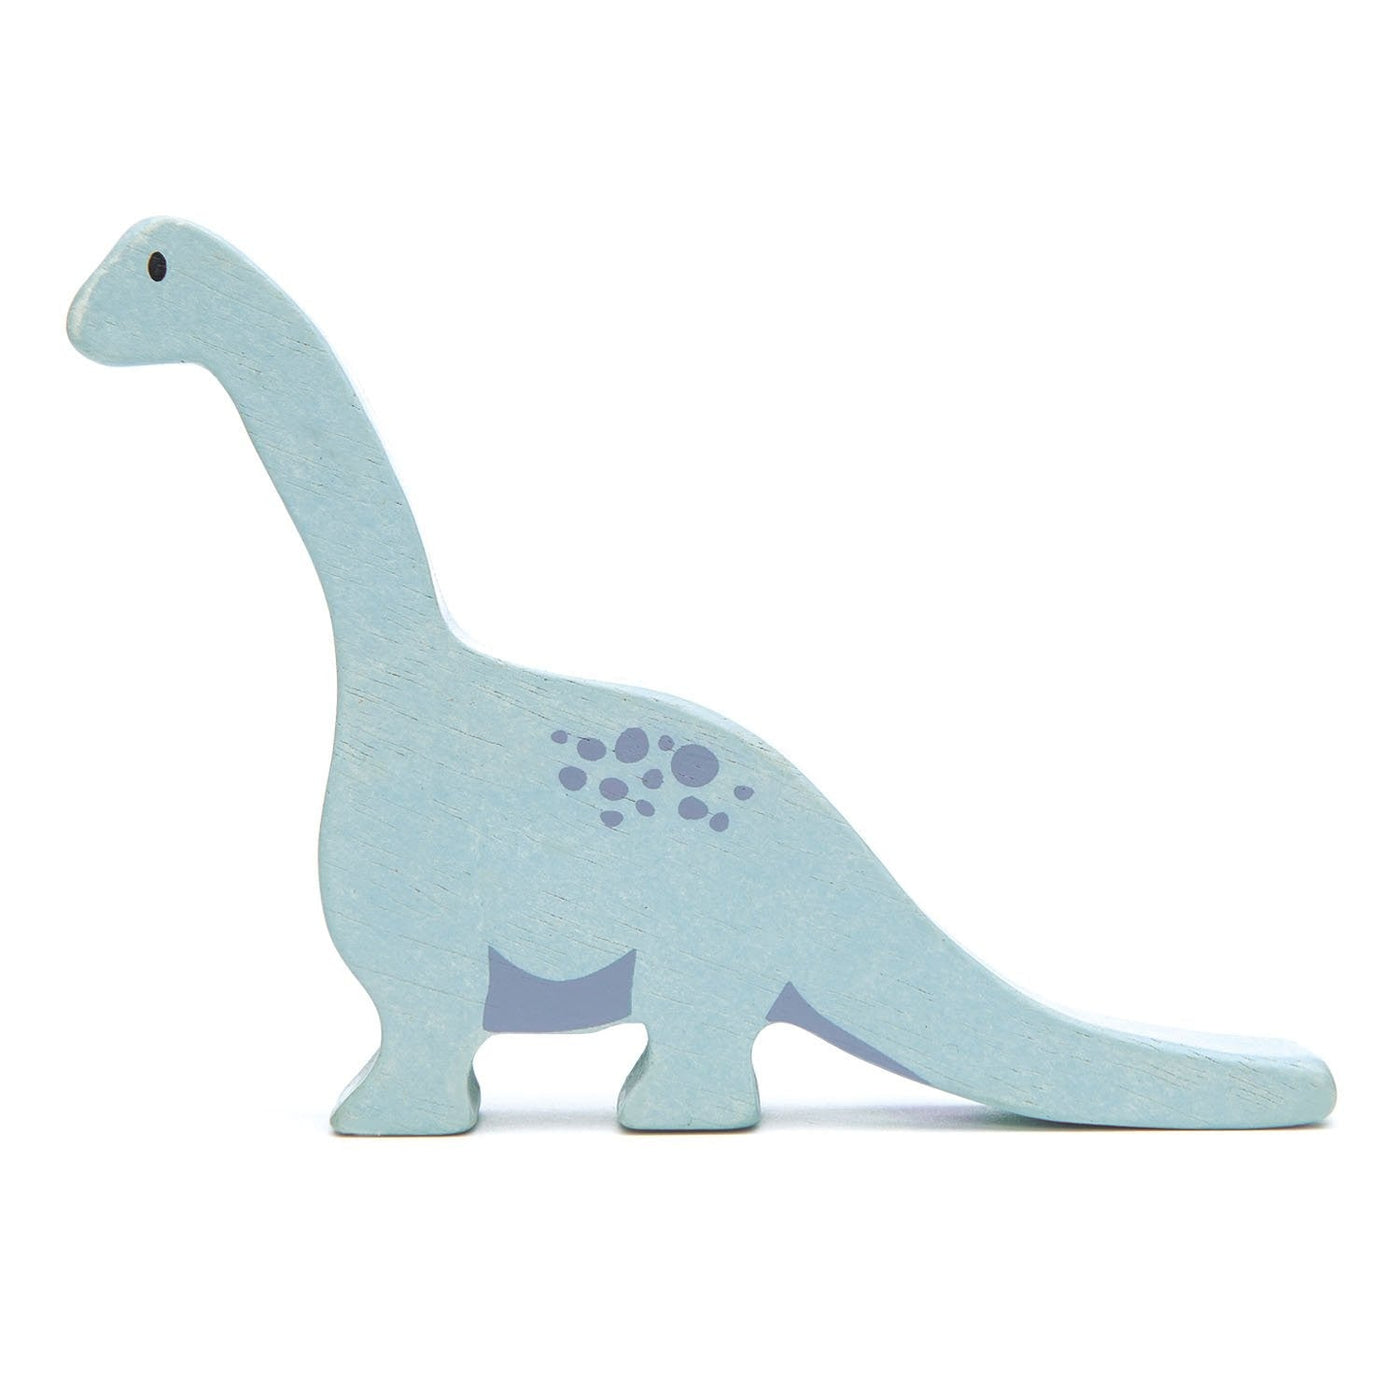 Tender Leaf Toys Dinosaur - Brontosaurus